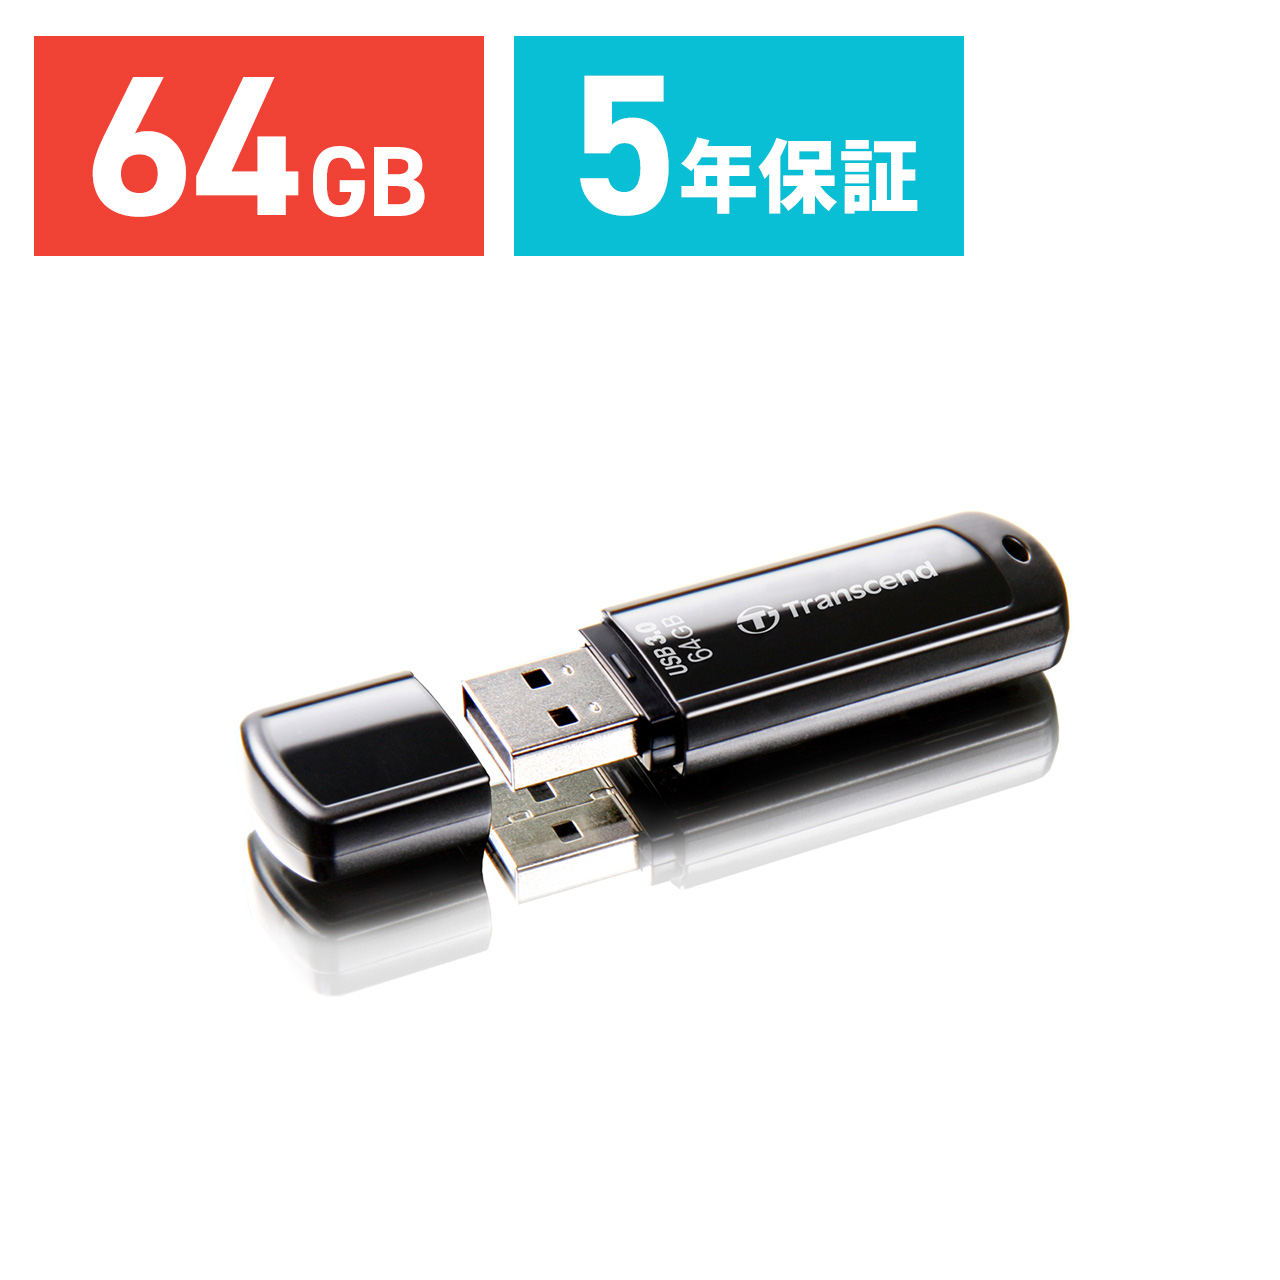 Transcend USBメモリ 64GB USB3.1(Gen1) JetFlash 700 ブラック